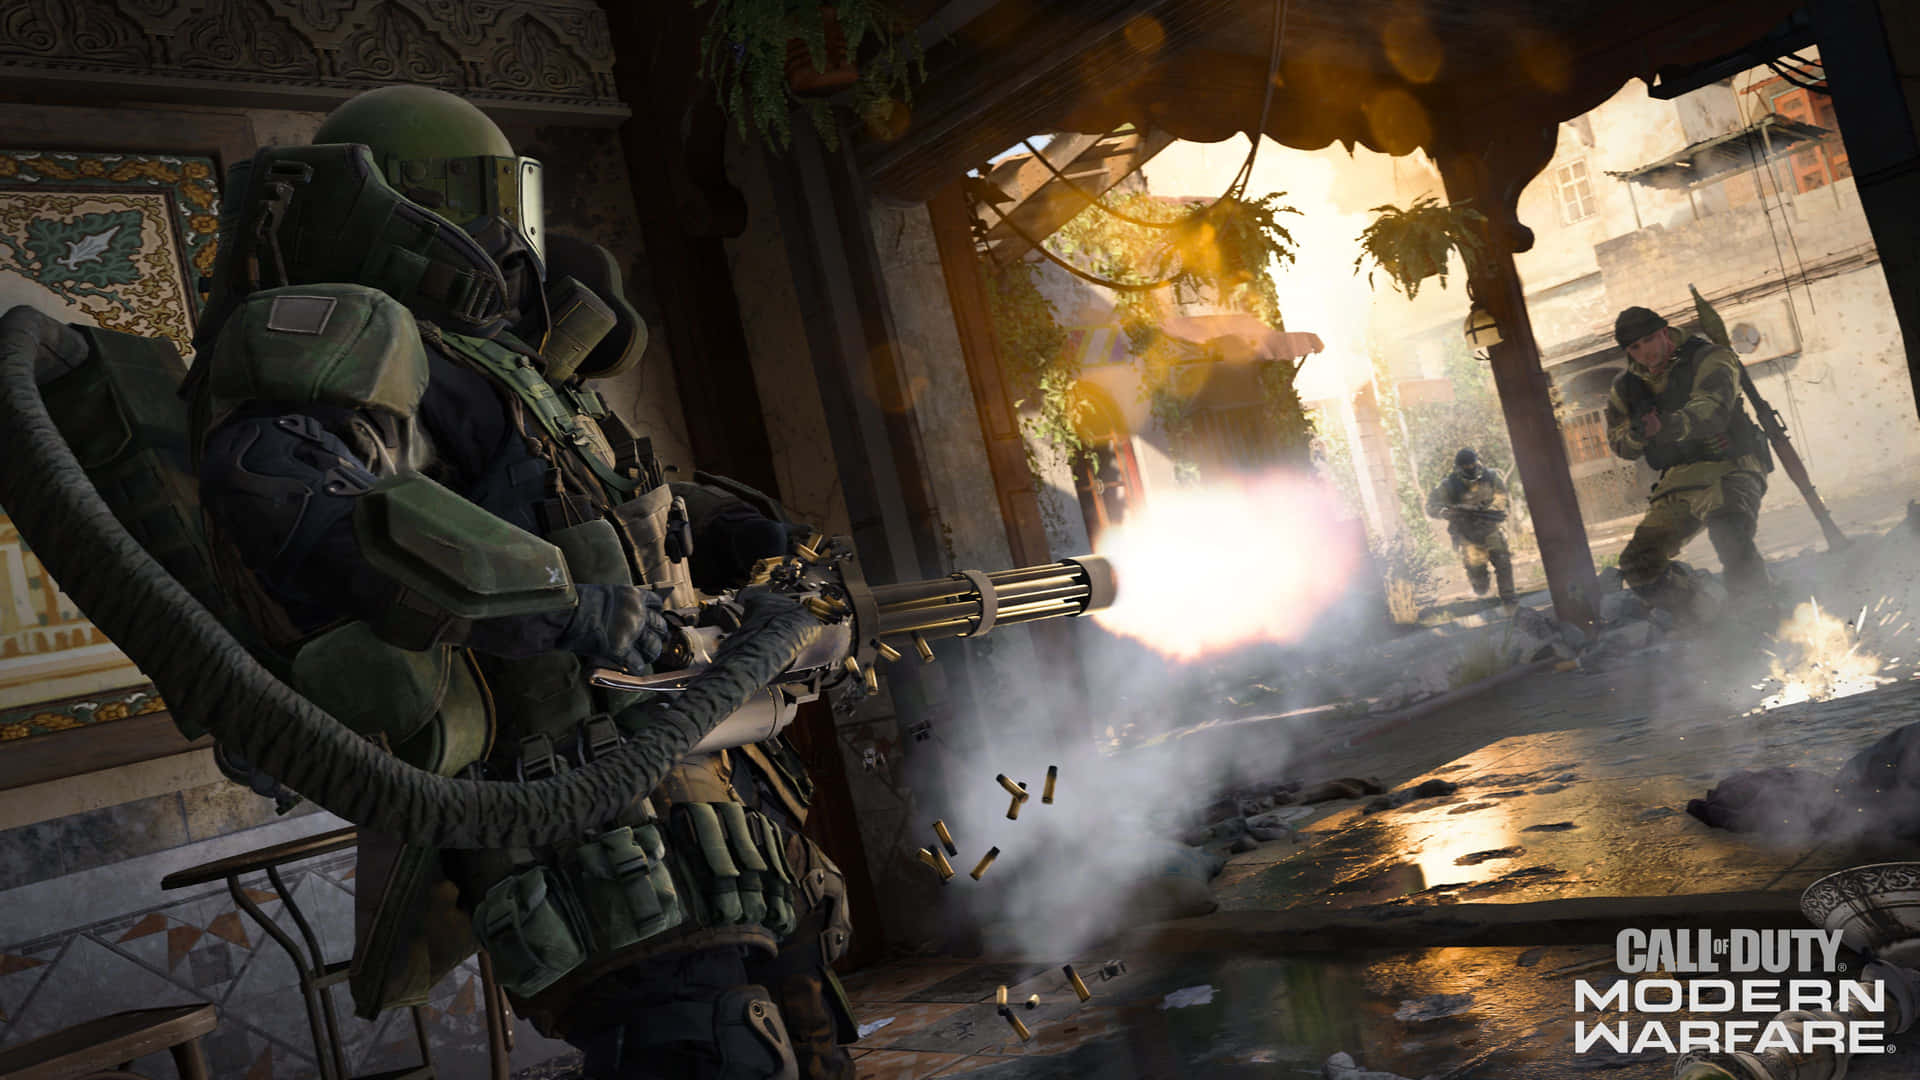 4k Call Of Duty Modern Warfare Background Soldier In A Building With Machine Gun